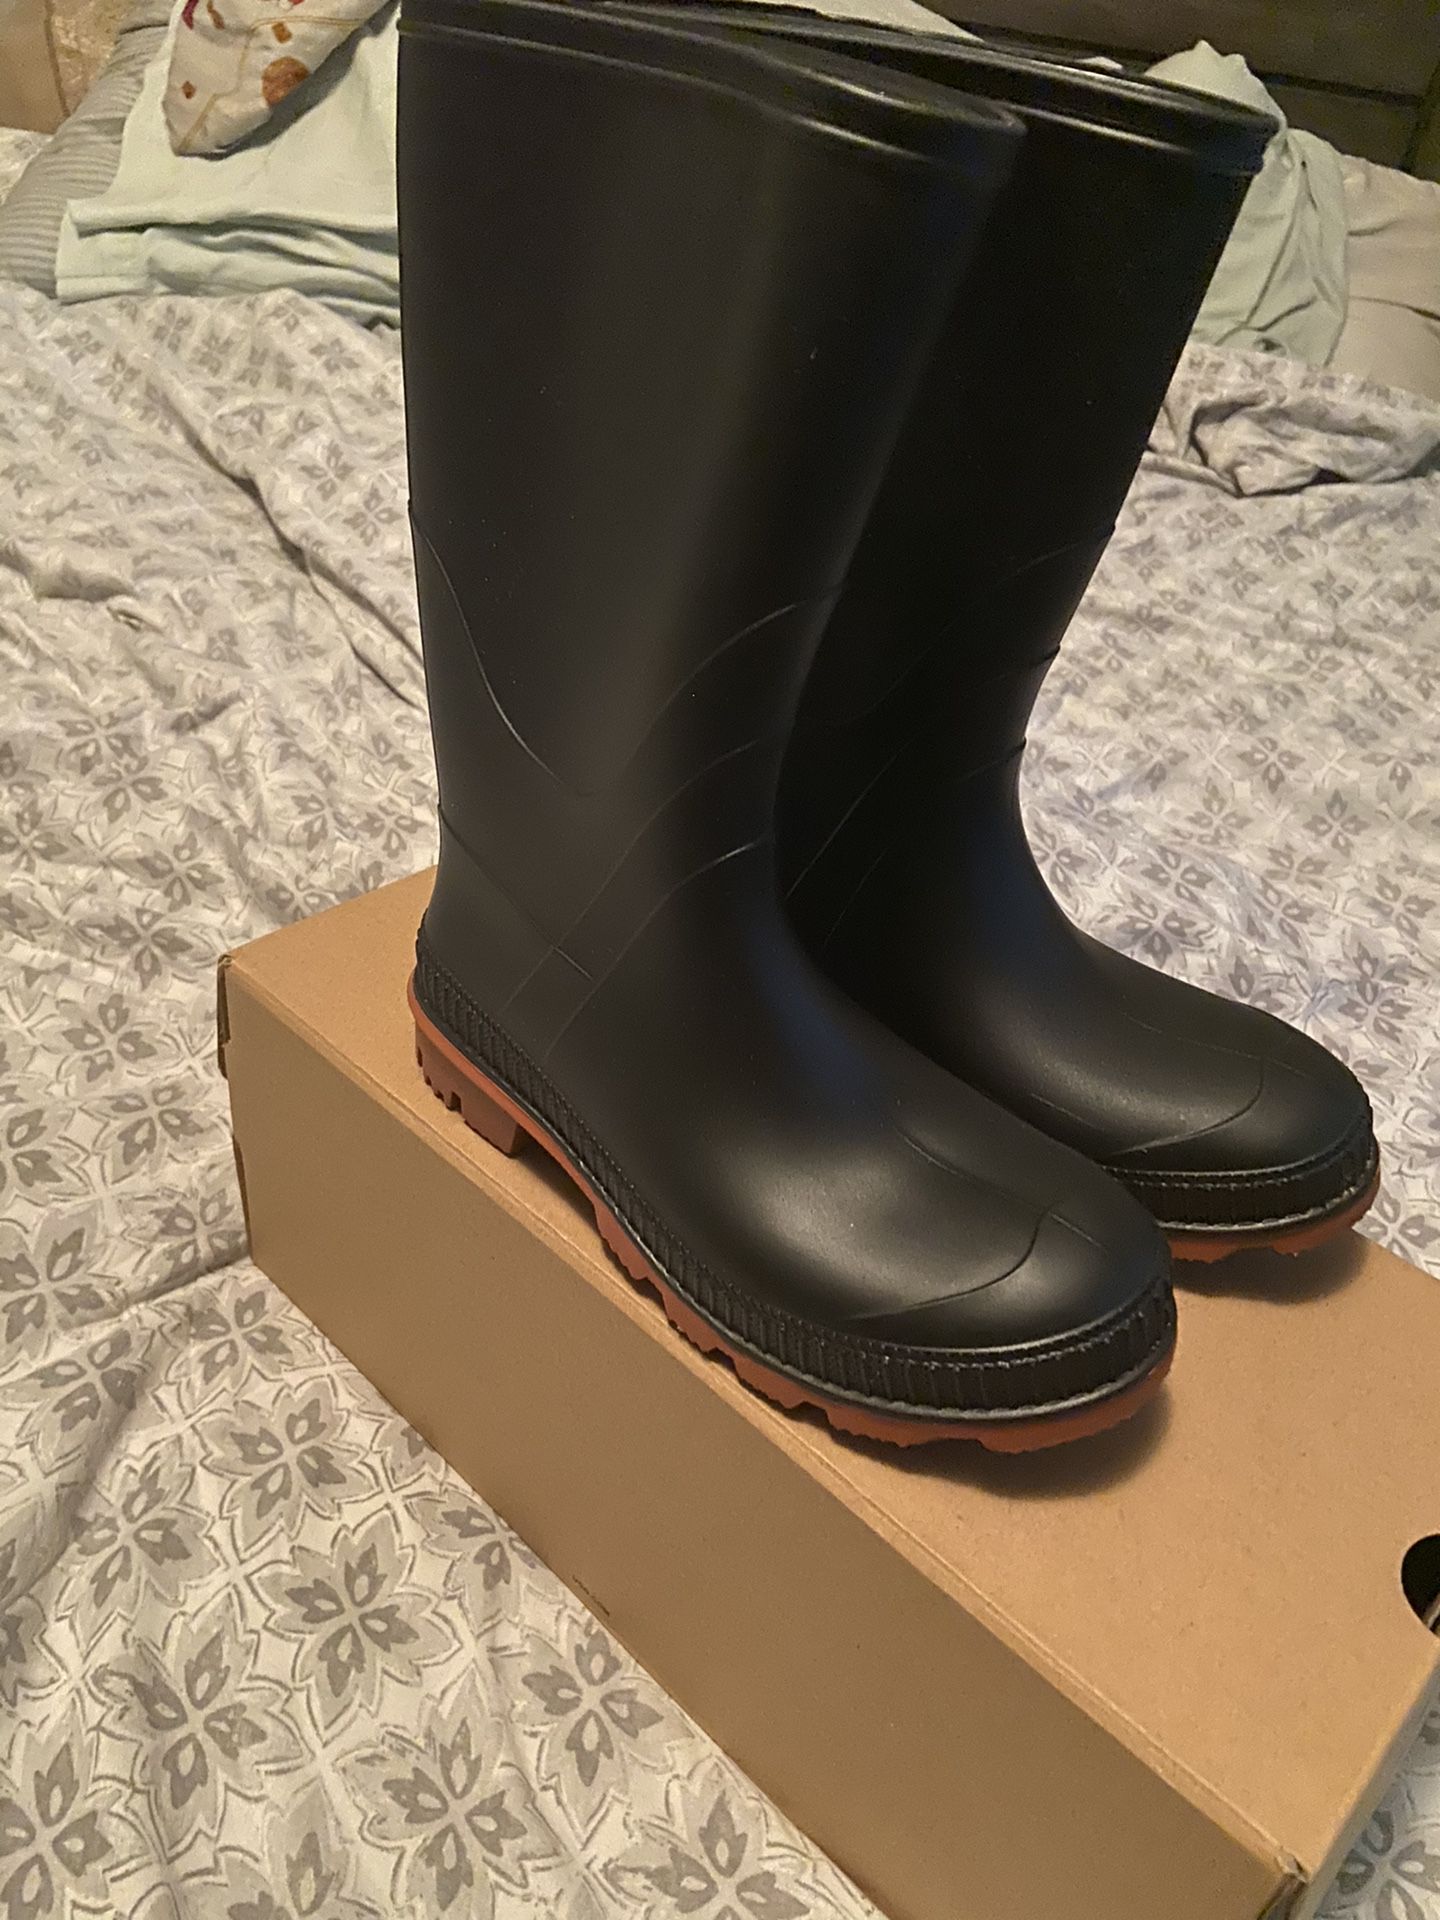 Kids Size 3 Rain Boots